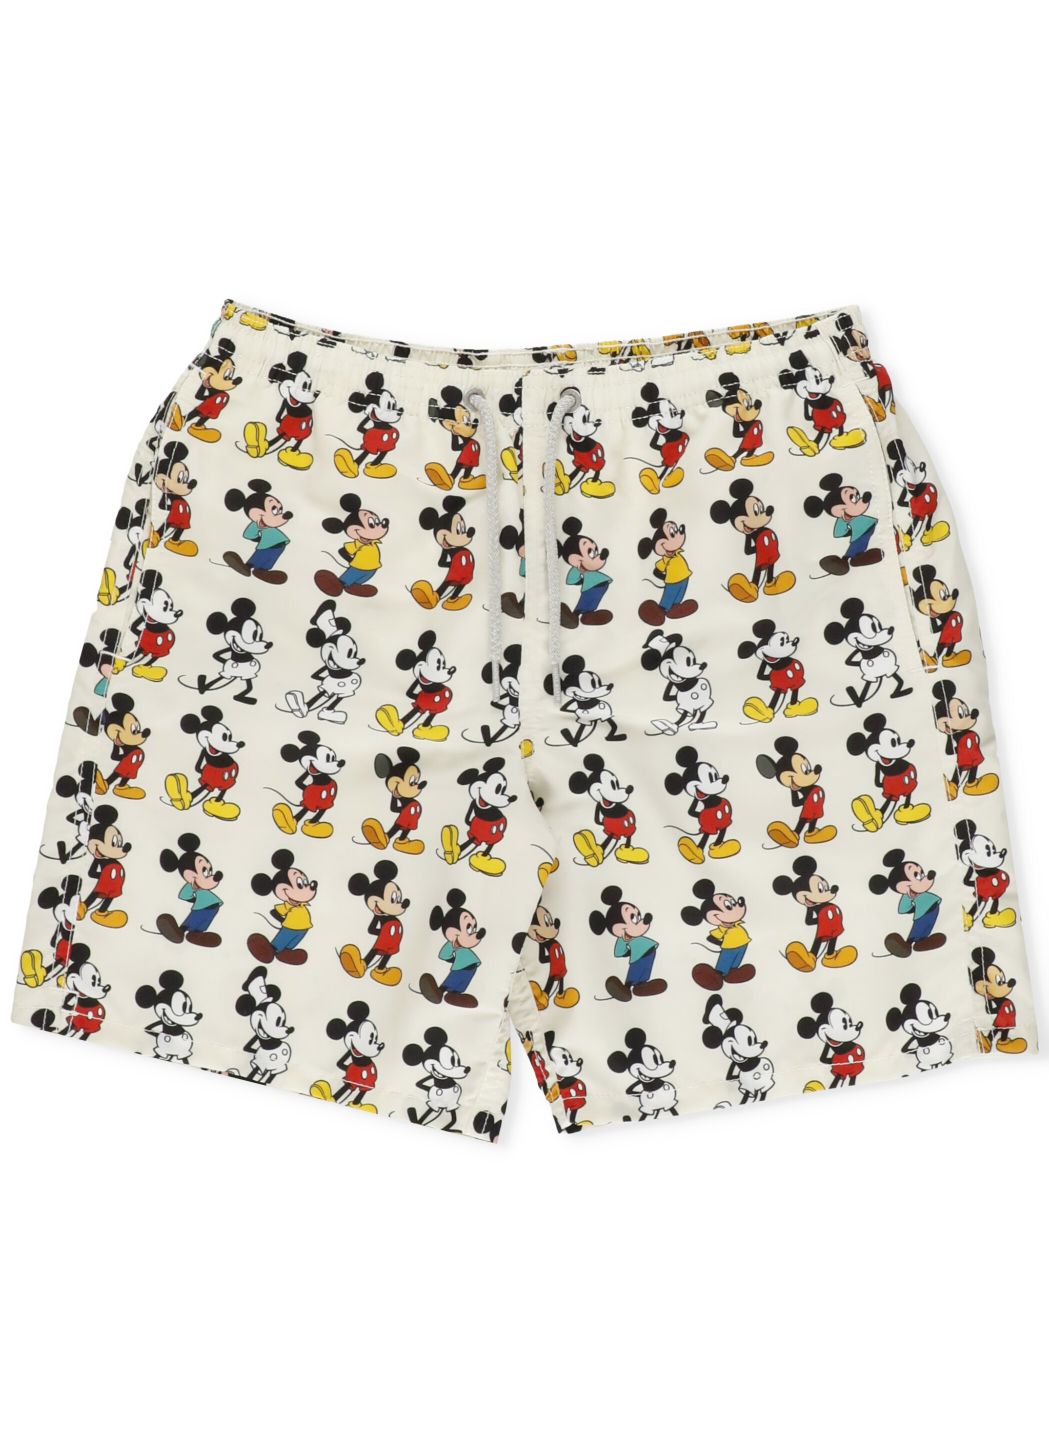 Mickey printed trunks